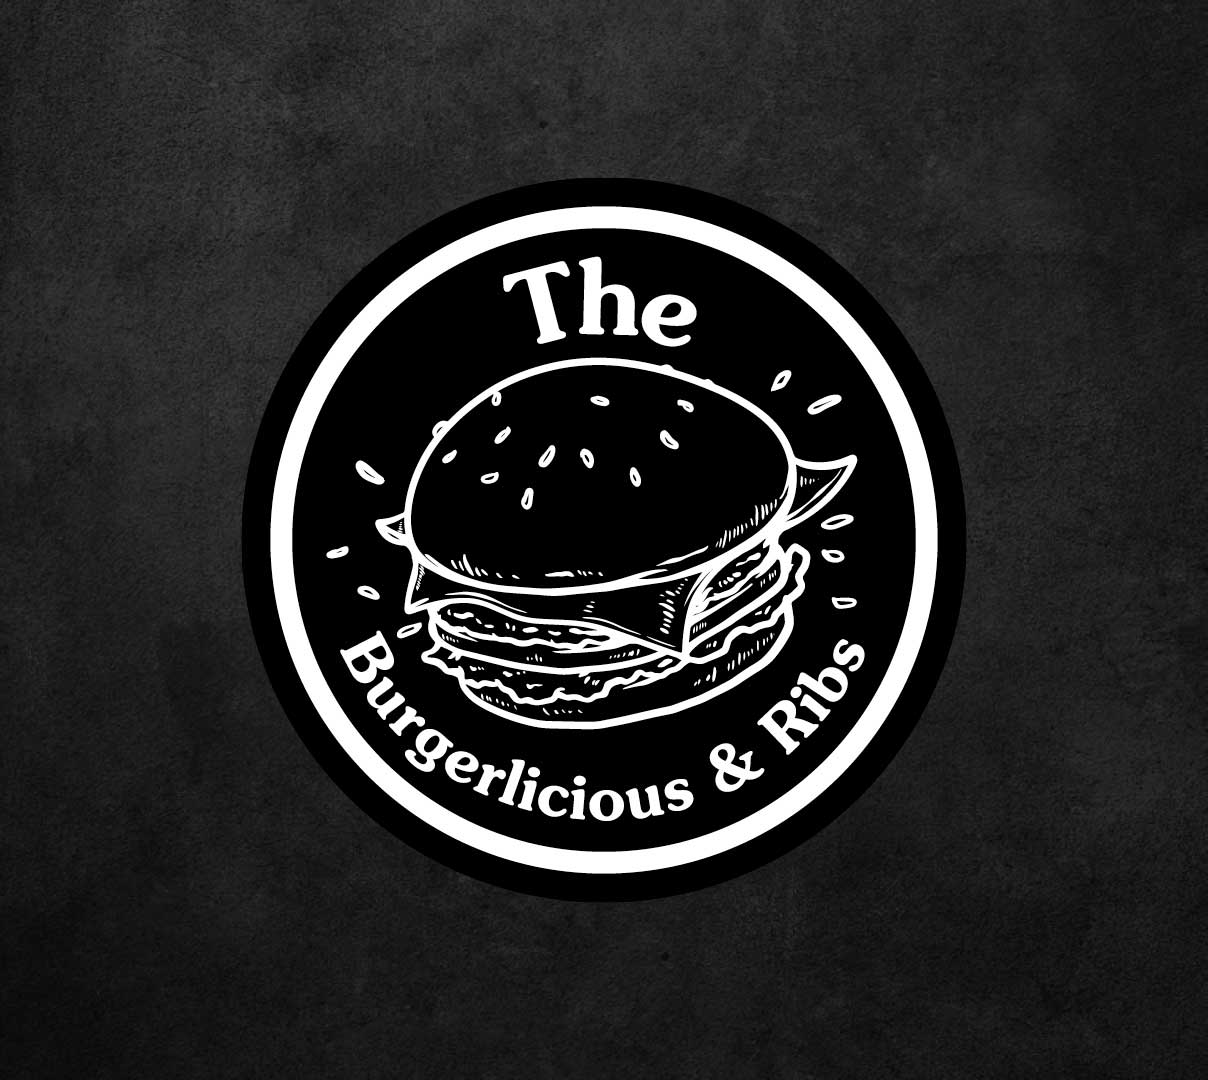 The Burgerlicious & Ribs åbner i City2 - burgere og BBQ-okseribs